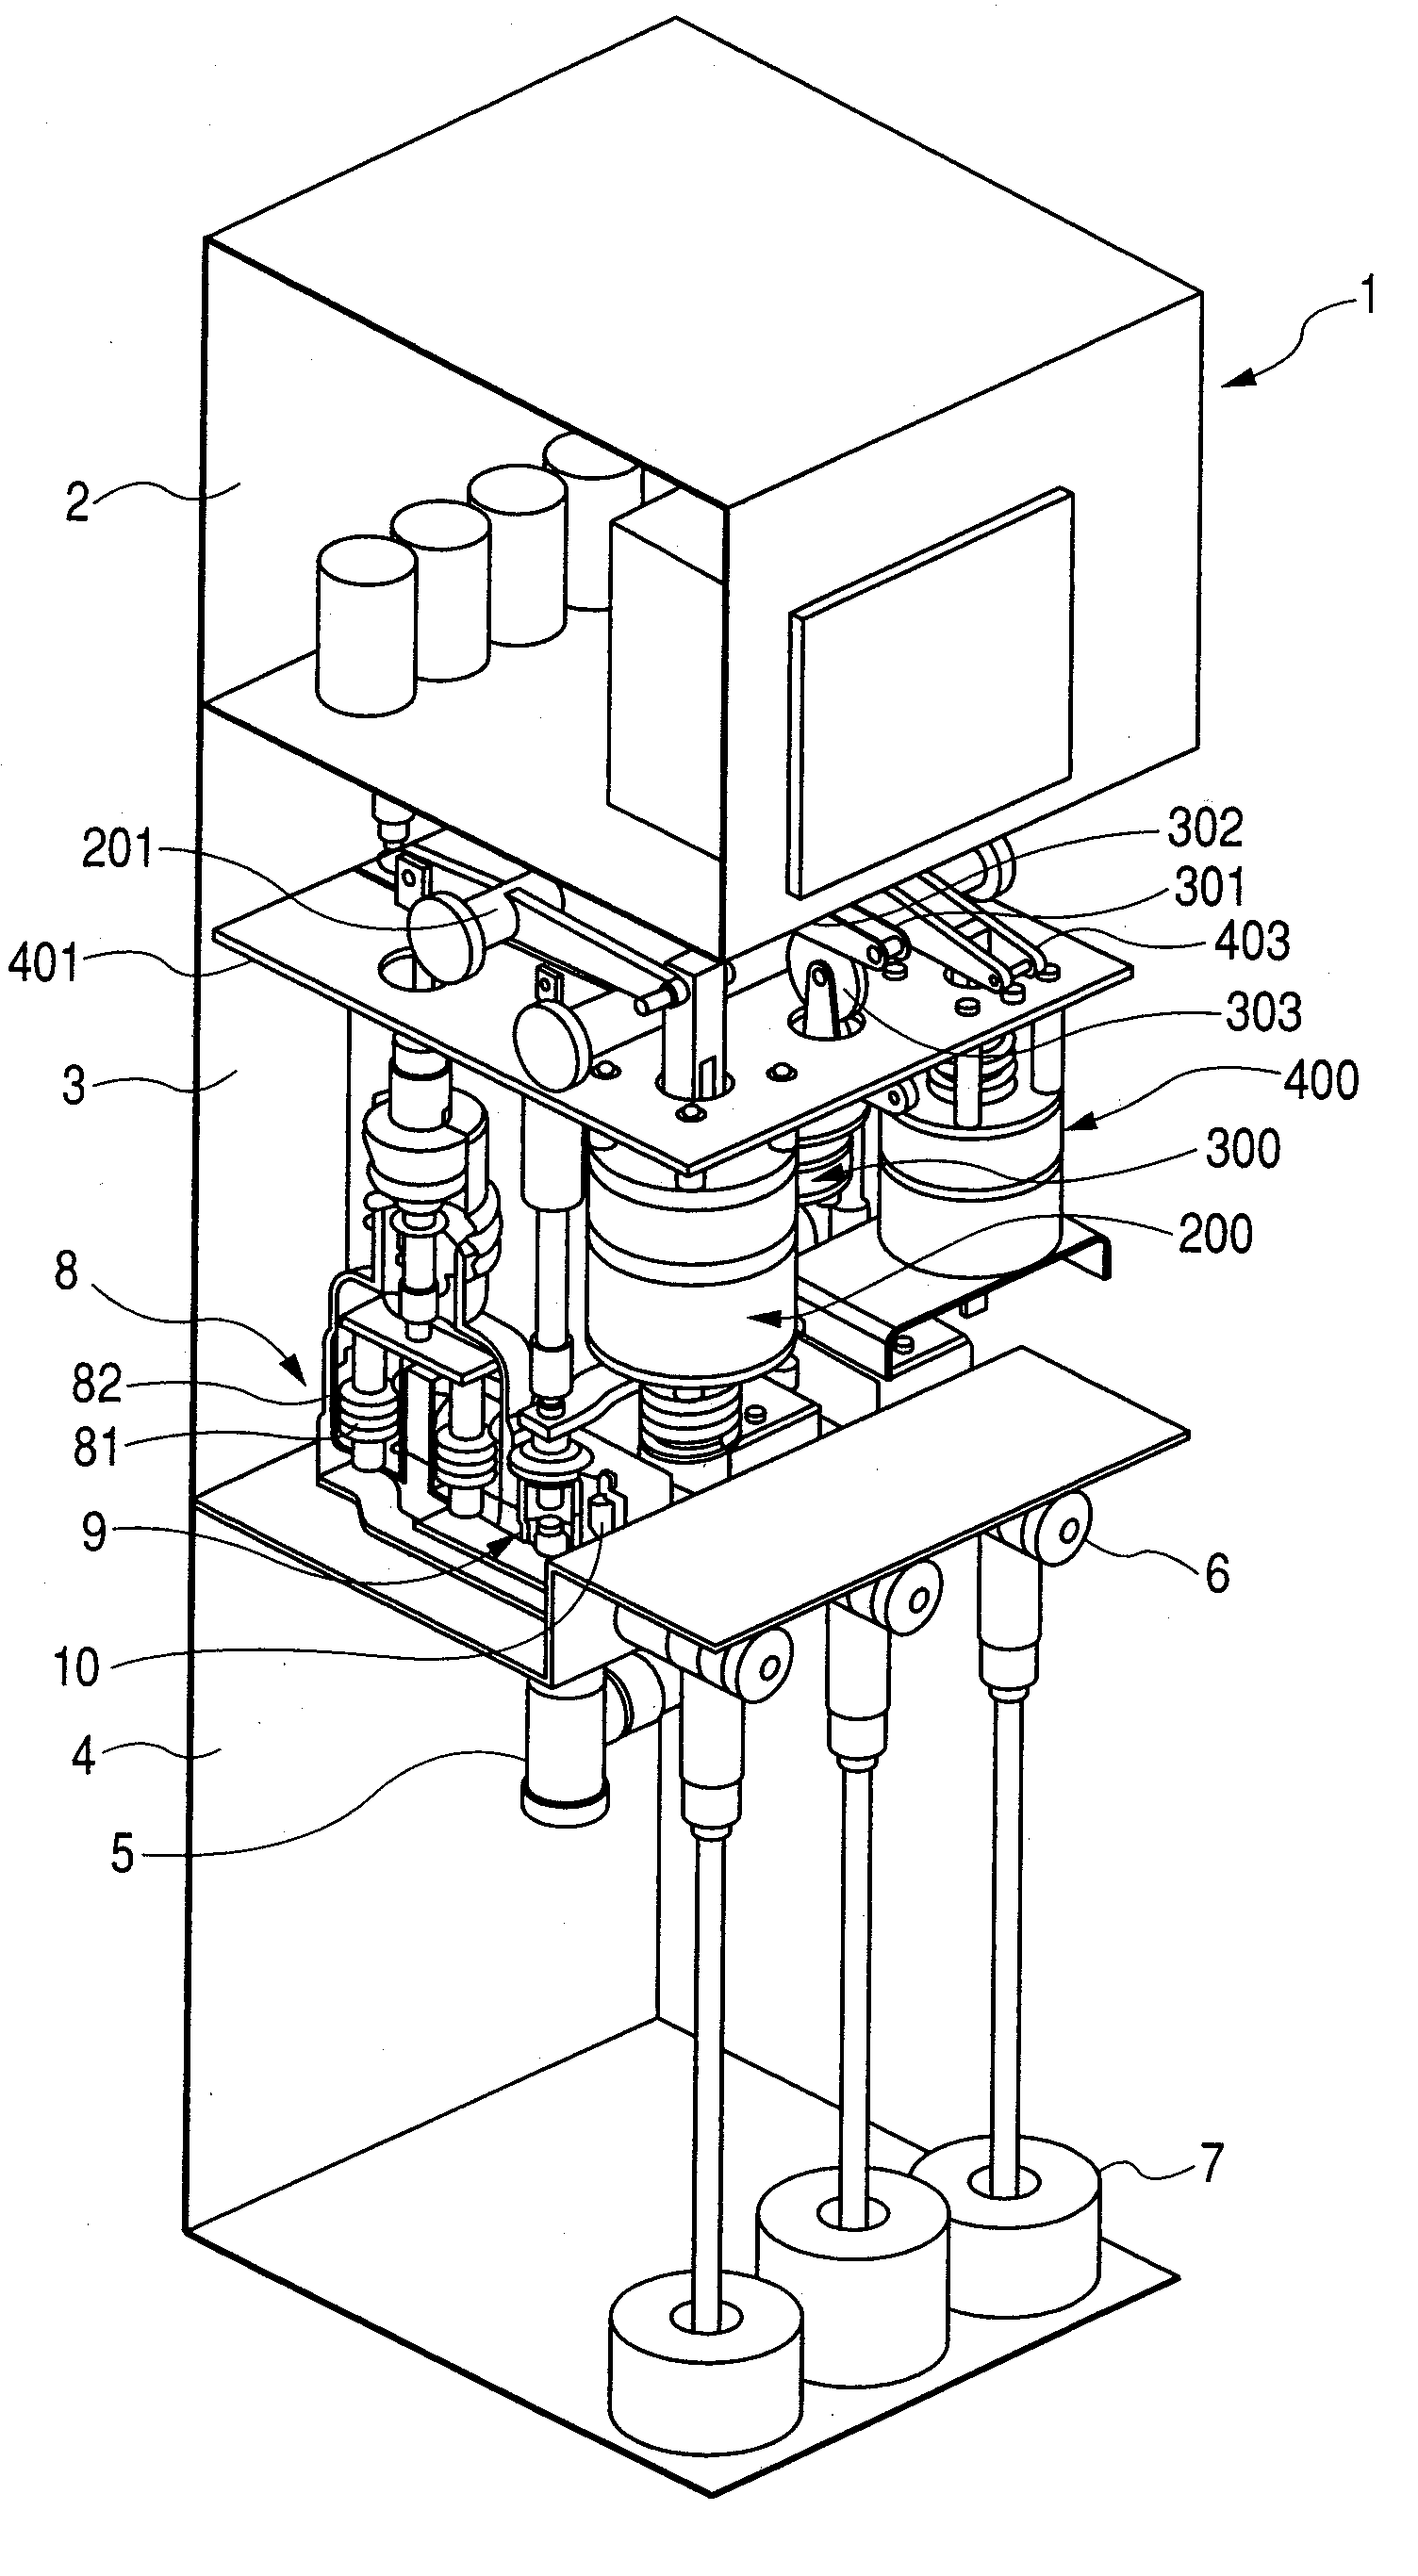 Vacuum insulated switchgear